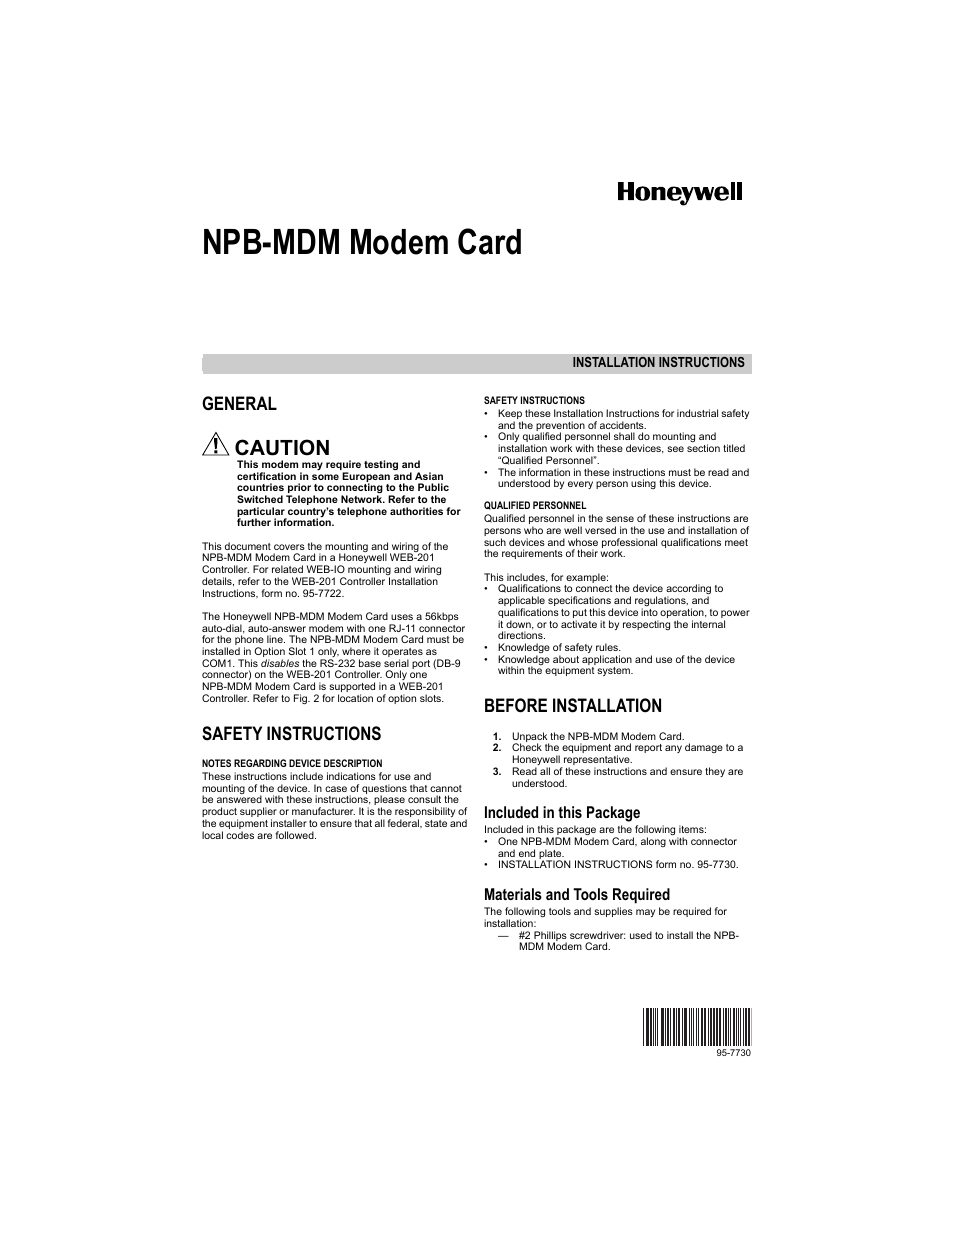 Honeywell NPB-MDM User Manual | 4 pages